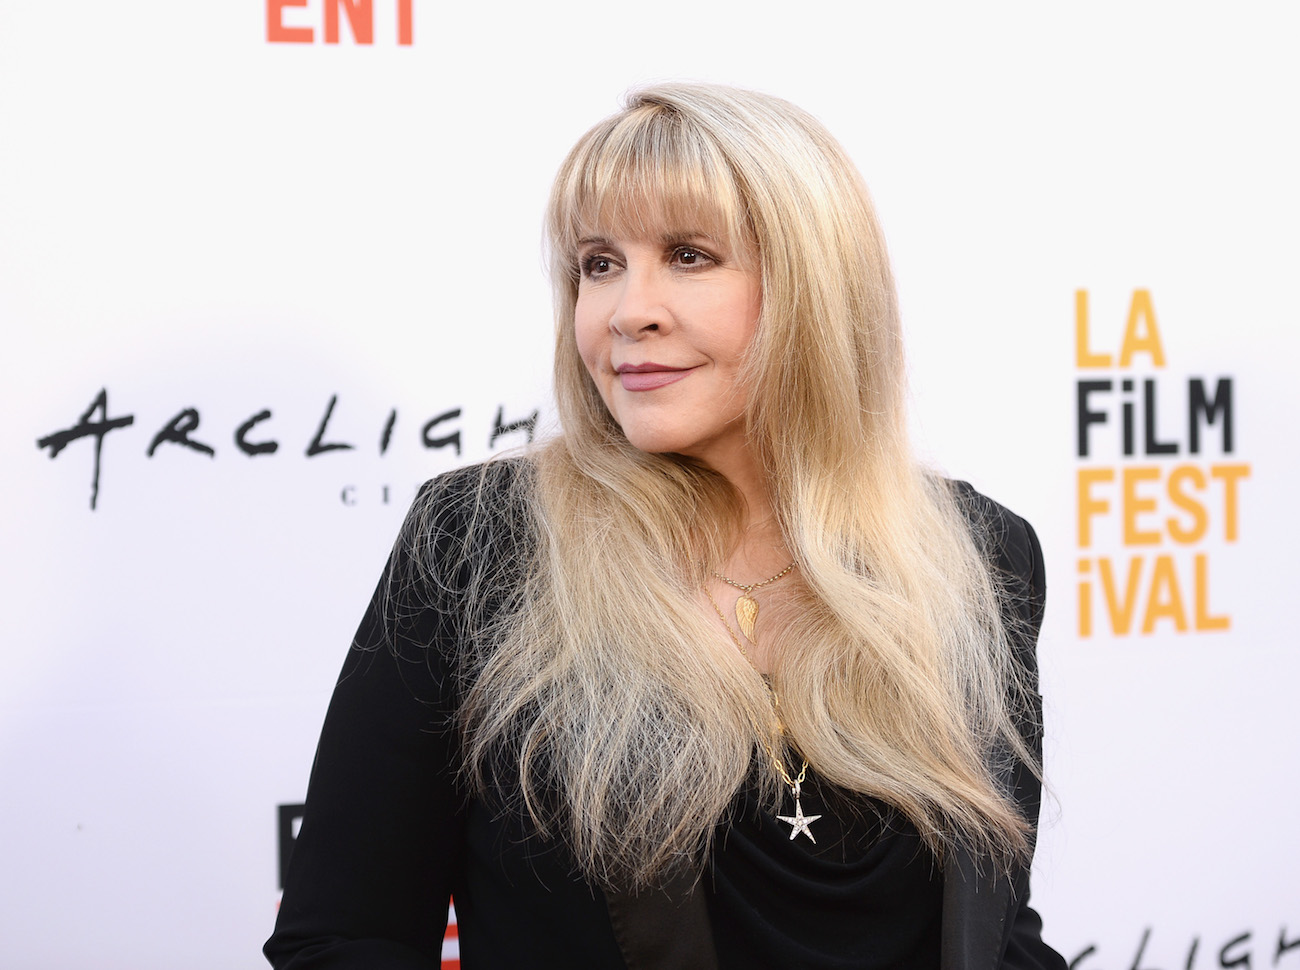 Stevie Nicks wearing black on the red carpet of the 2017 LA Film Festival.